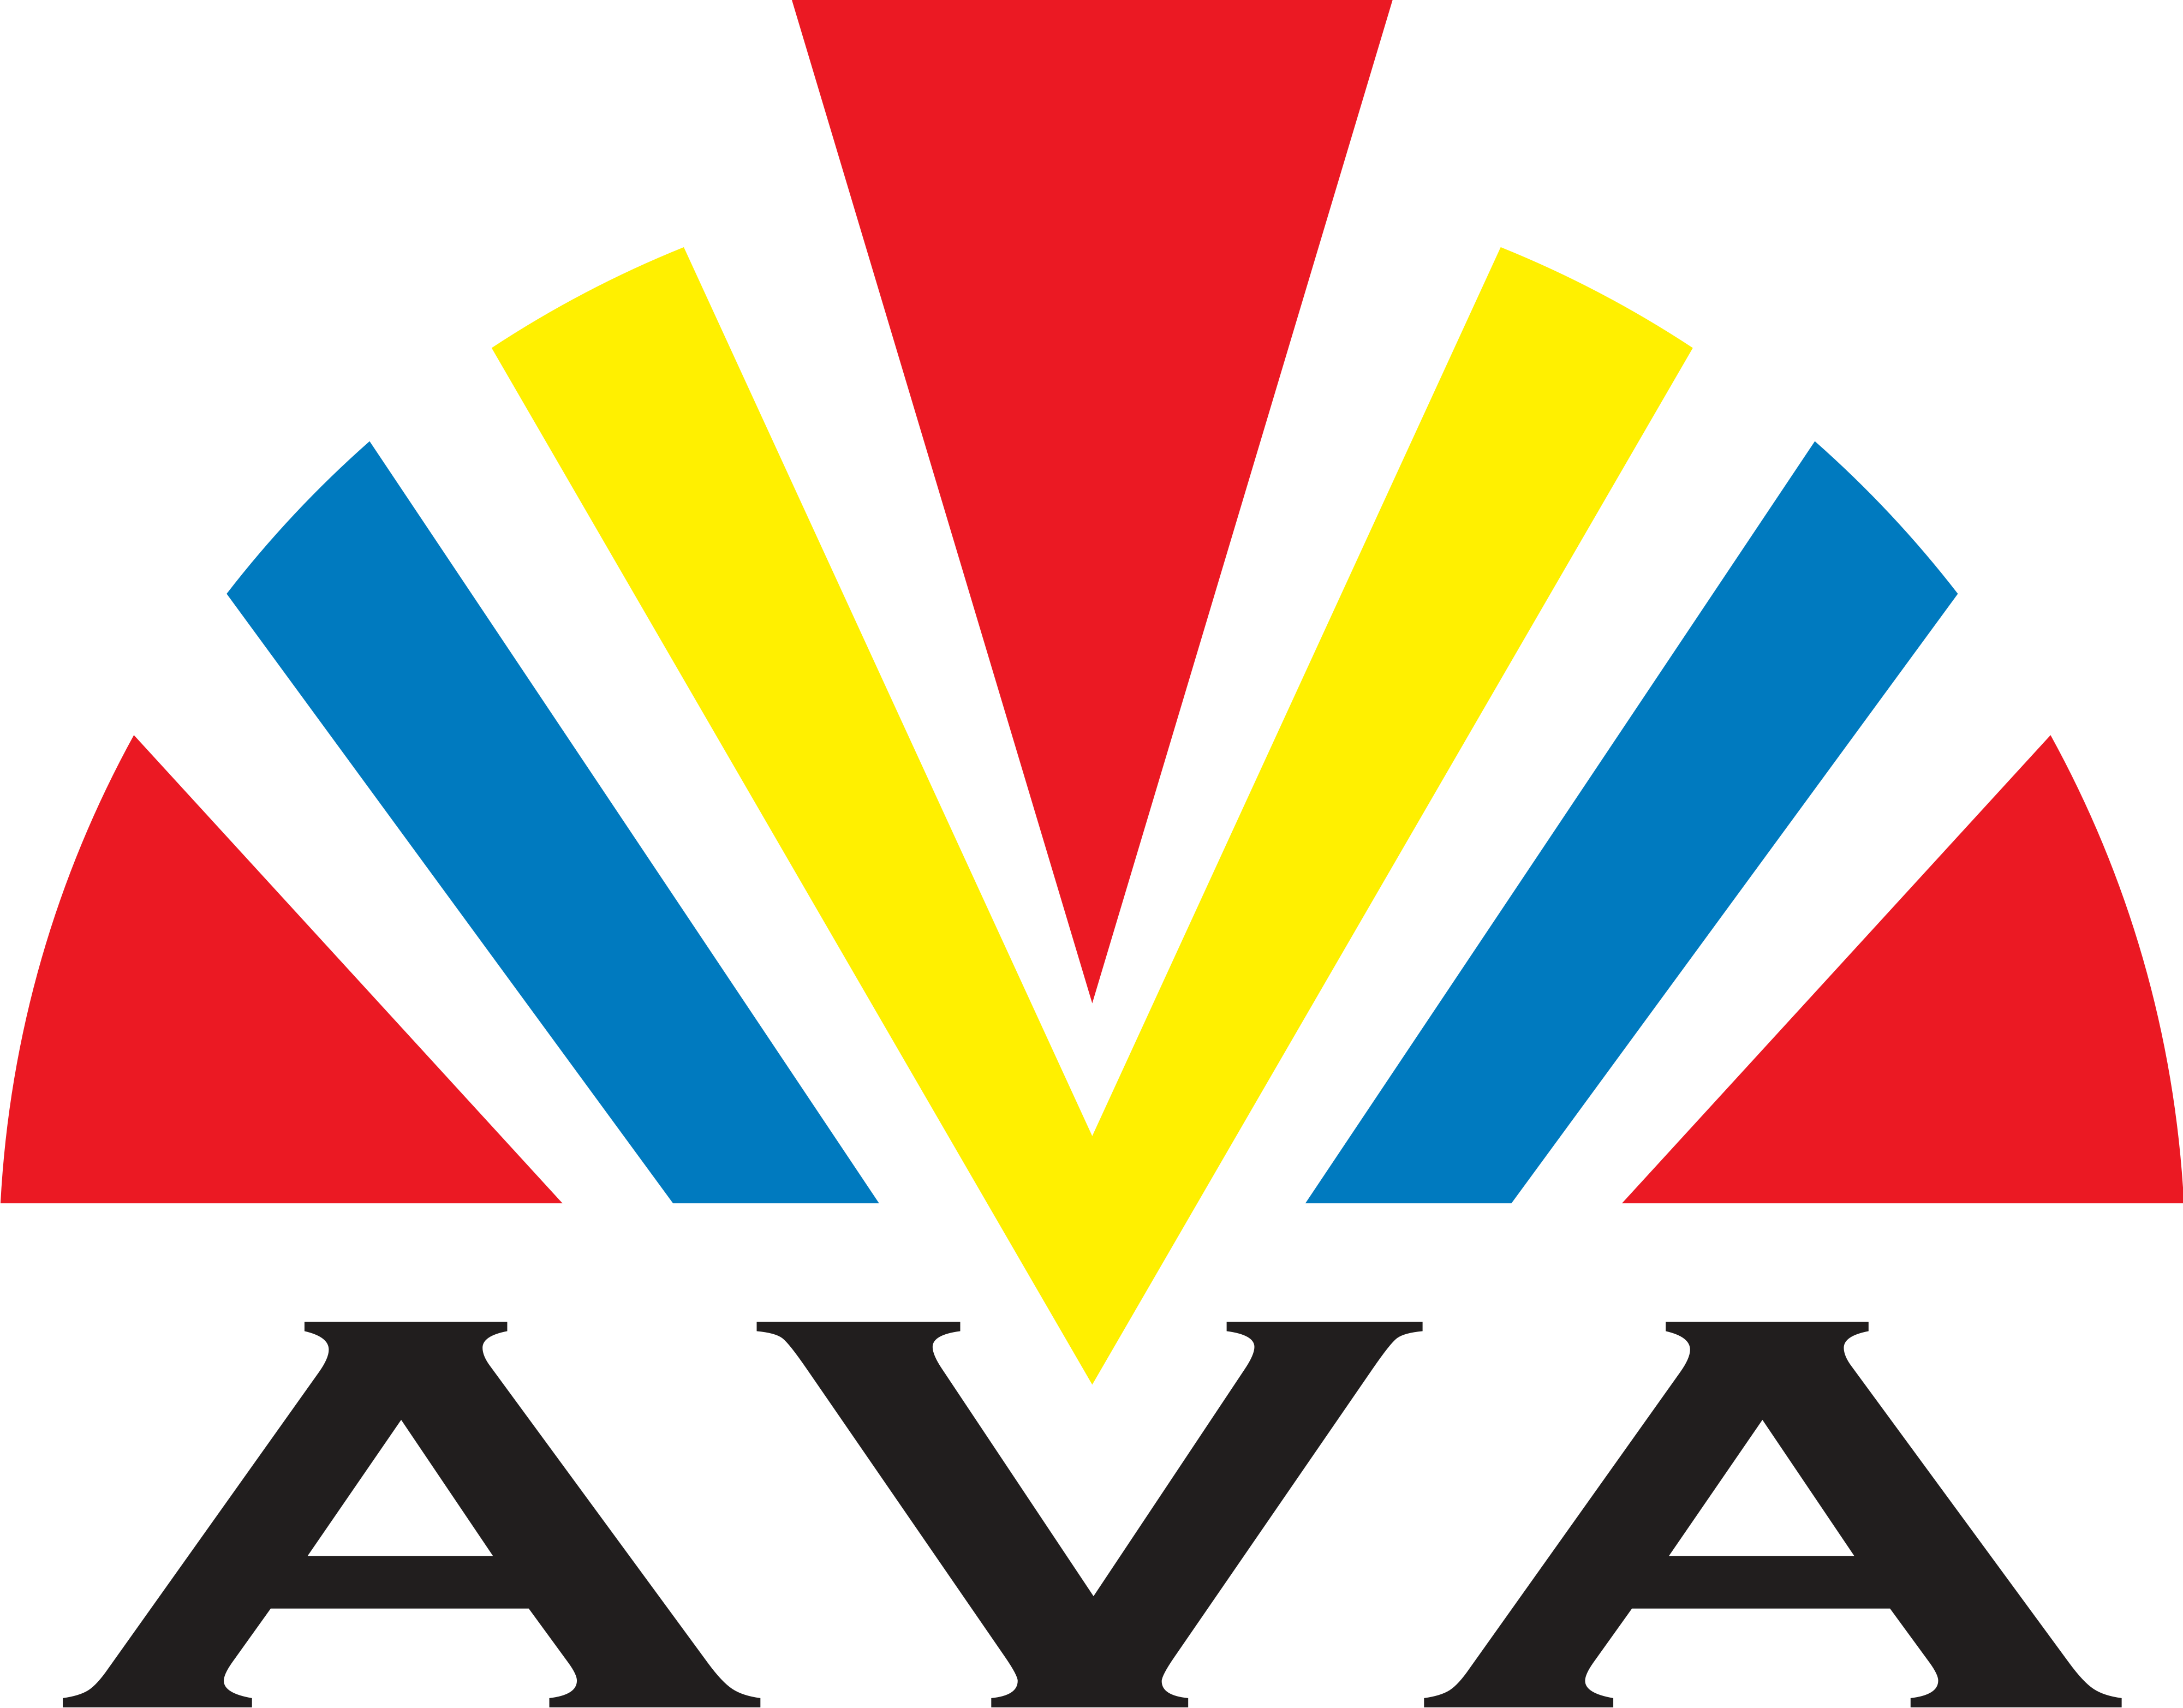 AVA logo download.